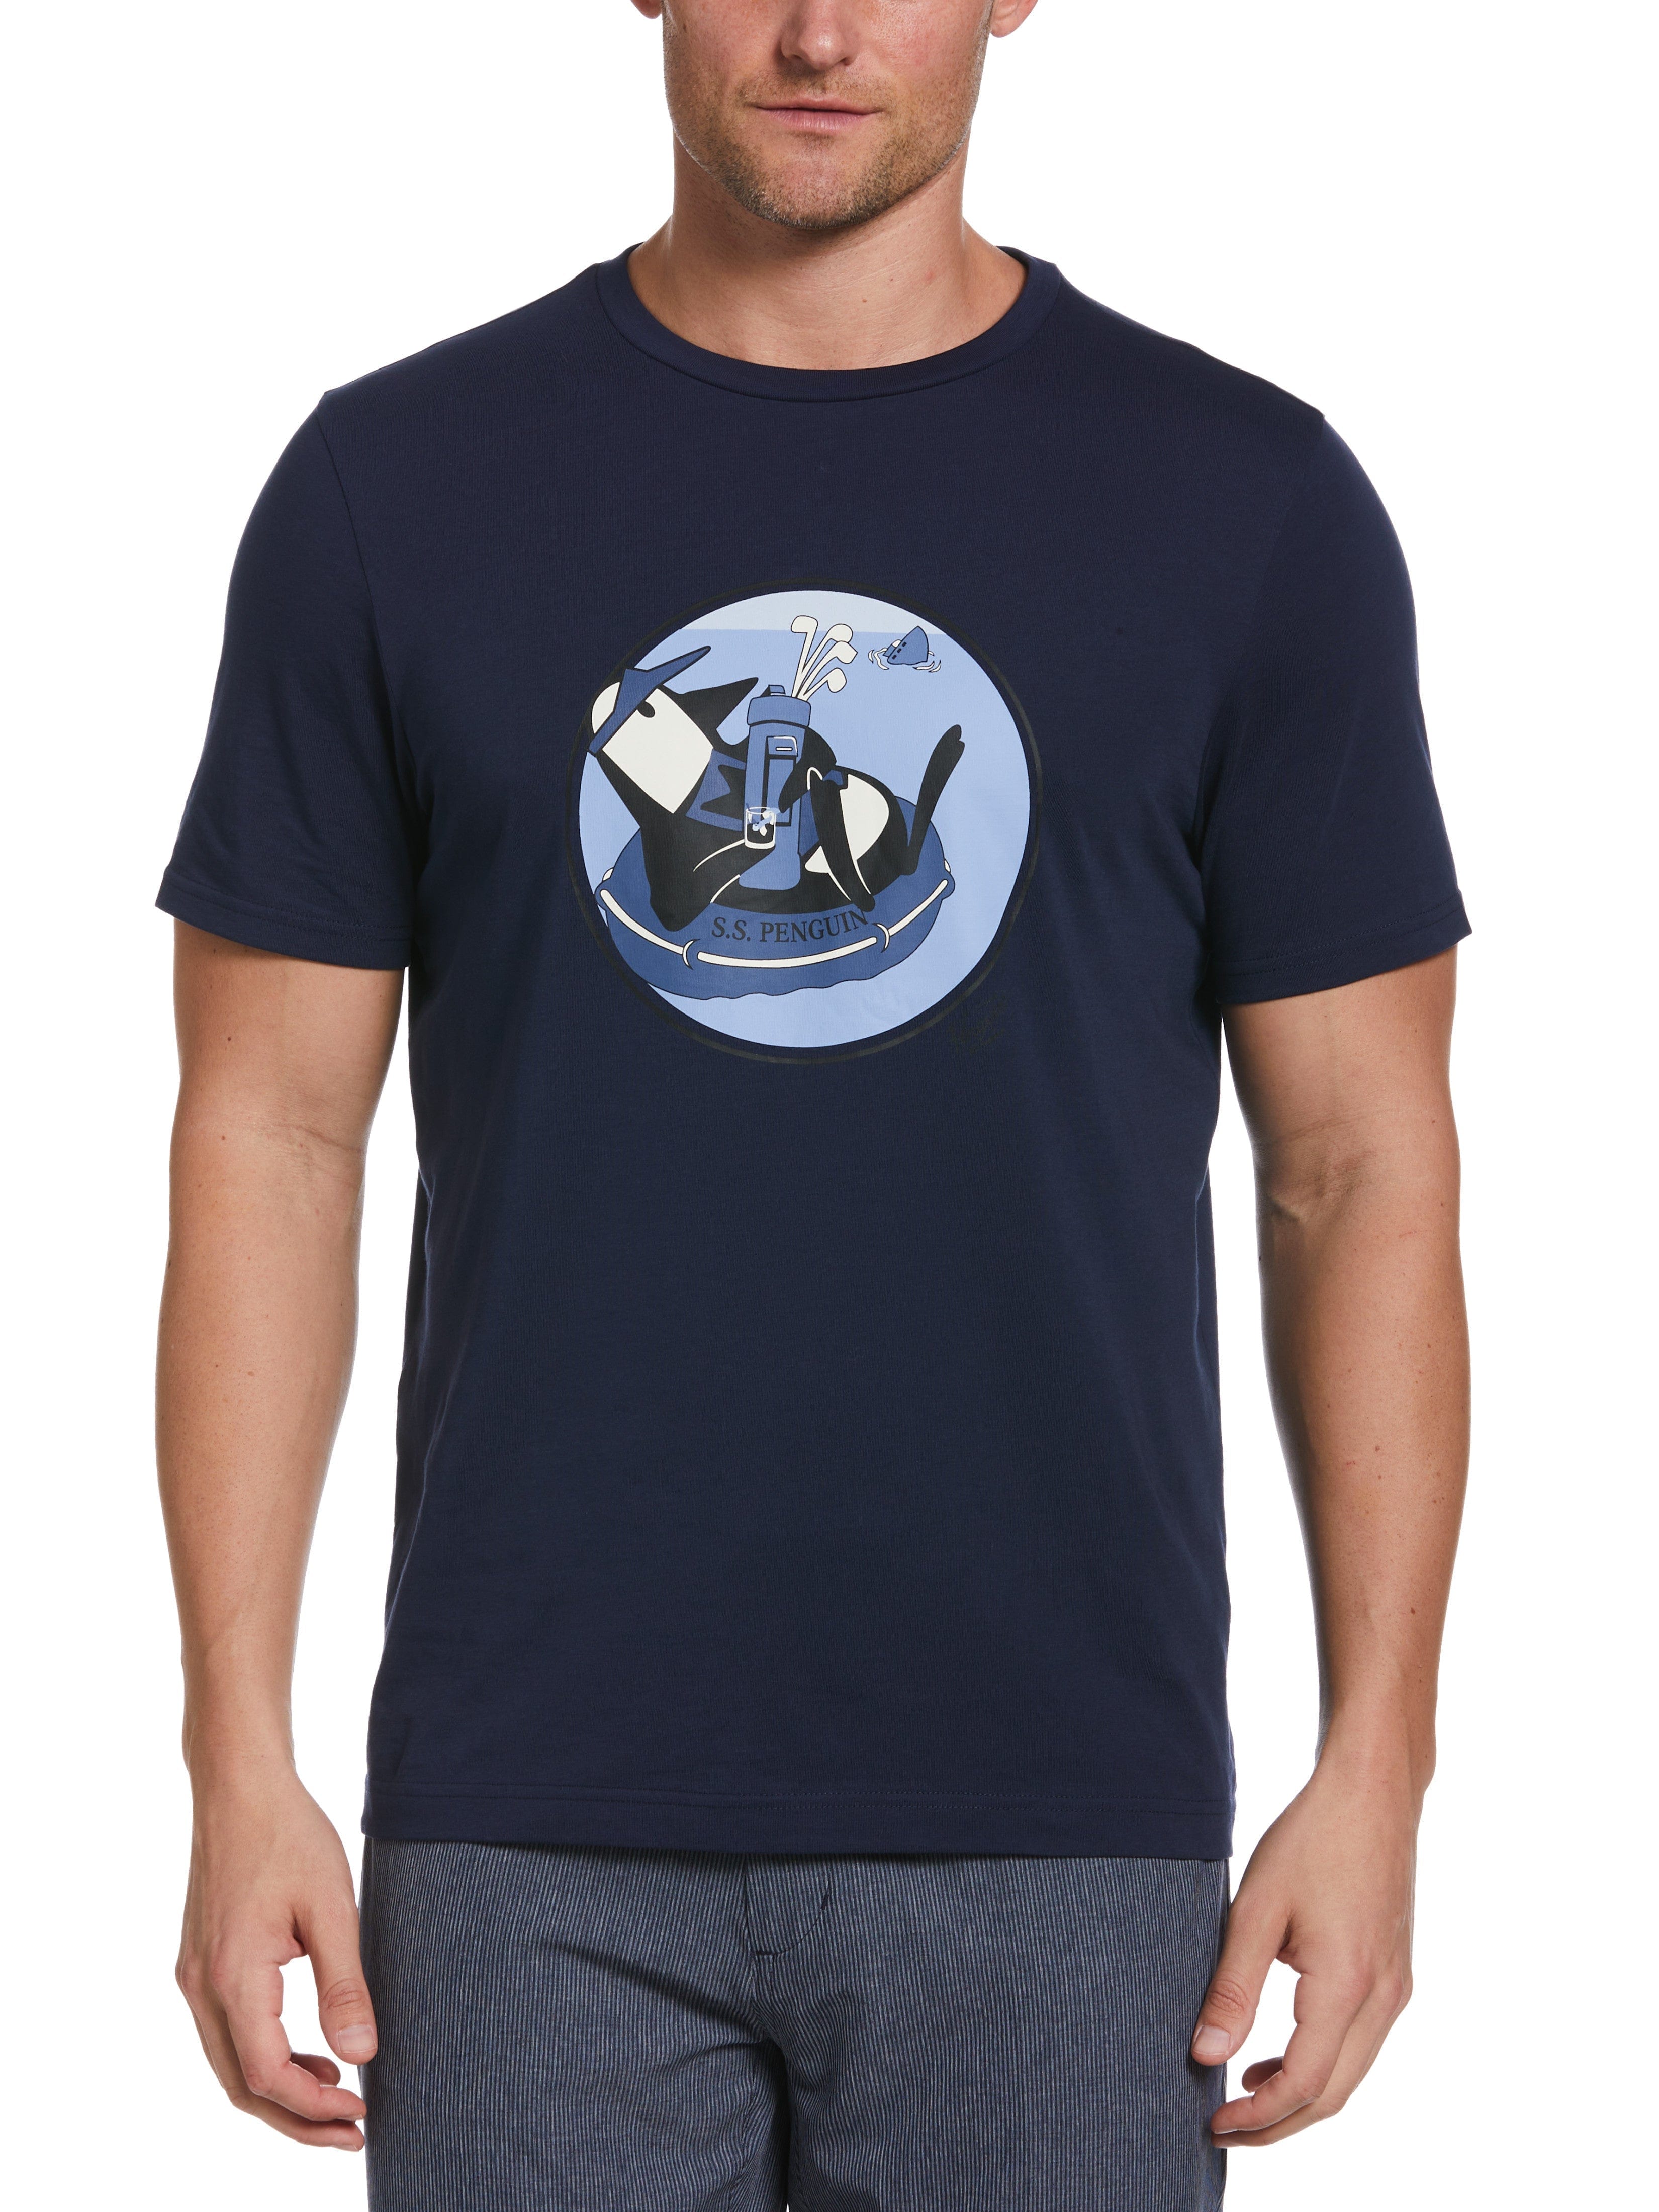 Original Penguin Mens Shipwreck Pete Graphic Golf T-Shirt, Size Small, Dark Navy Blue, 100% Cotton | Golf Apparel Shop